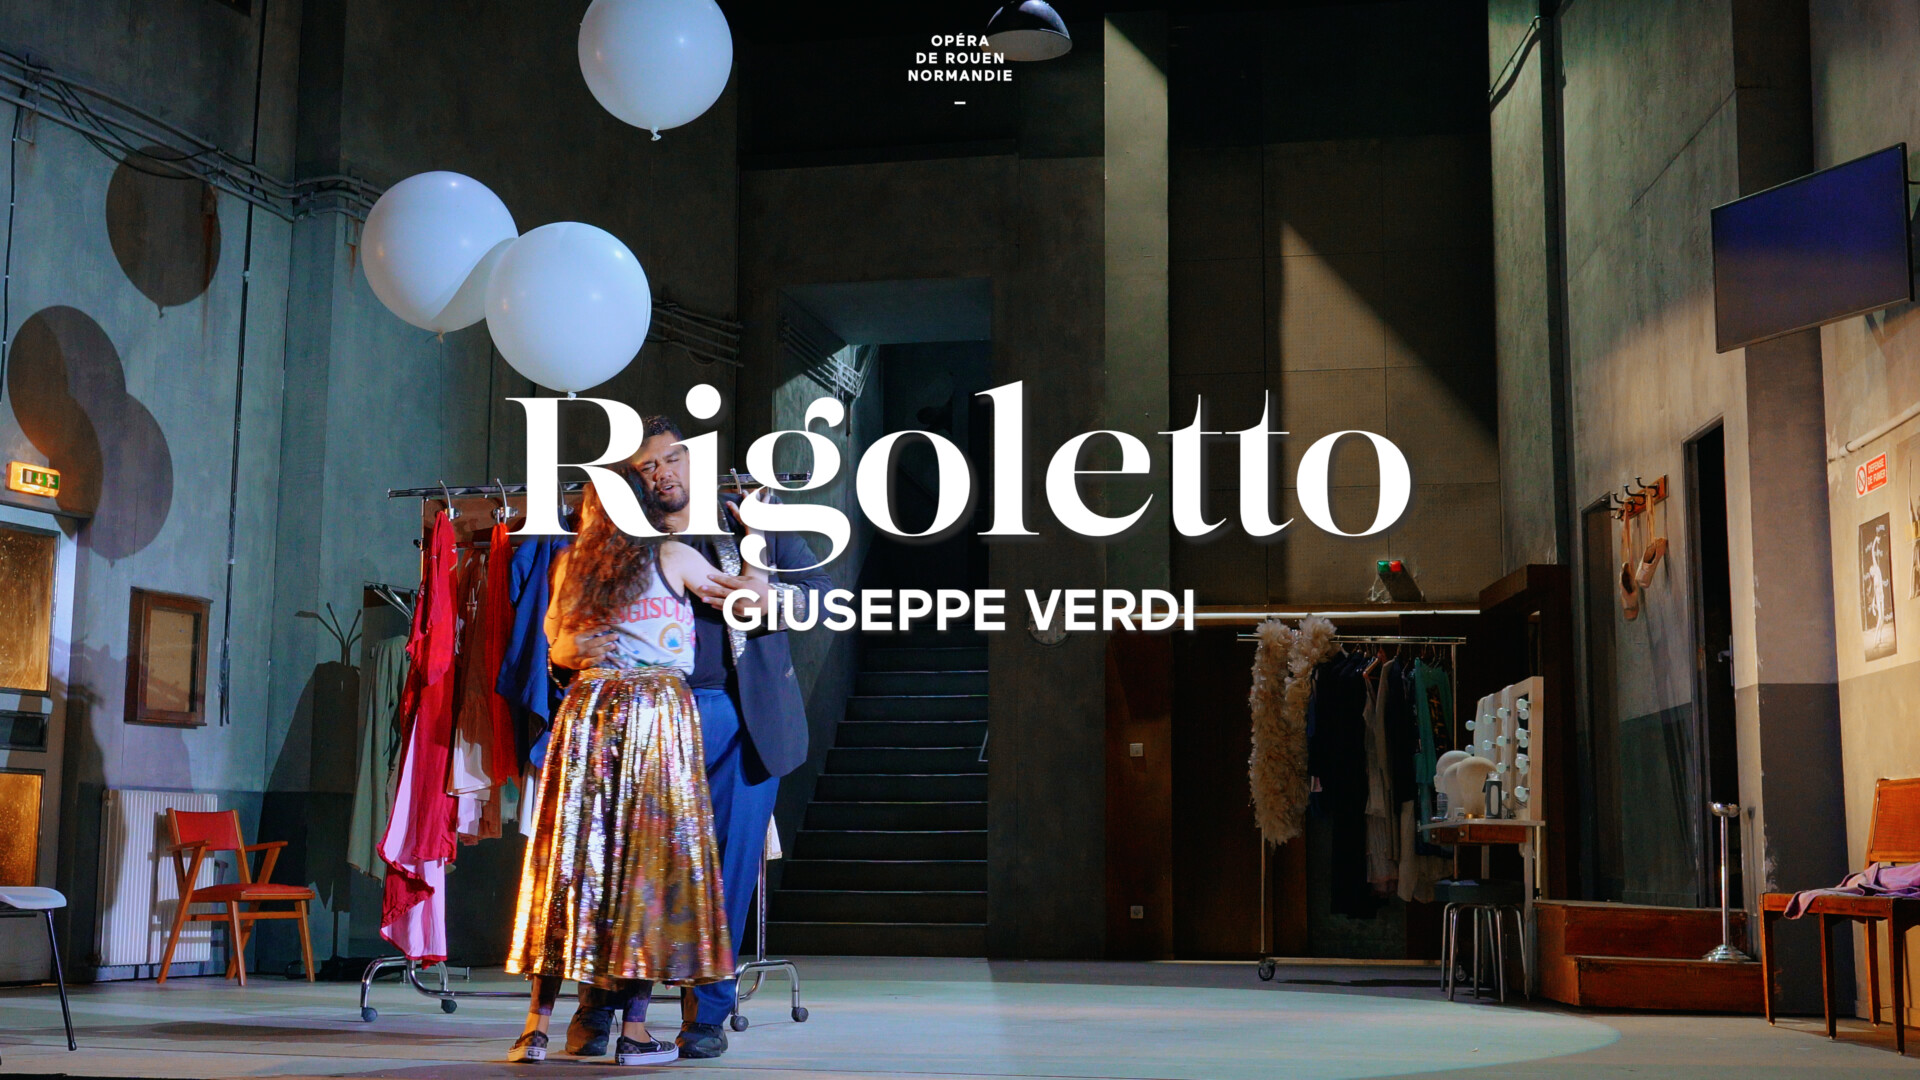 Une œuvre une minute : Rigoletto